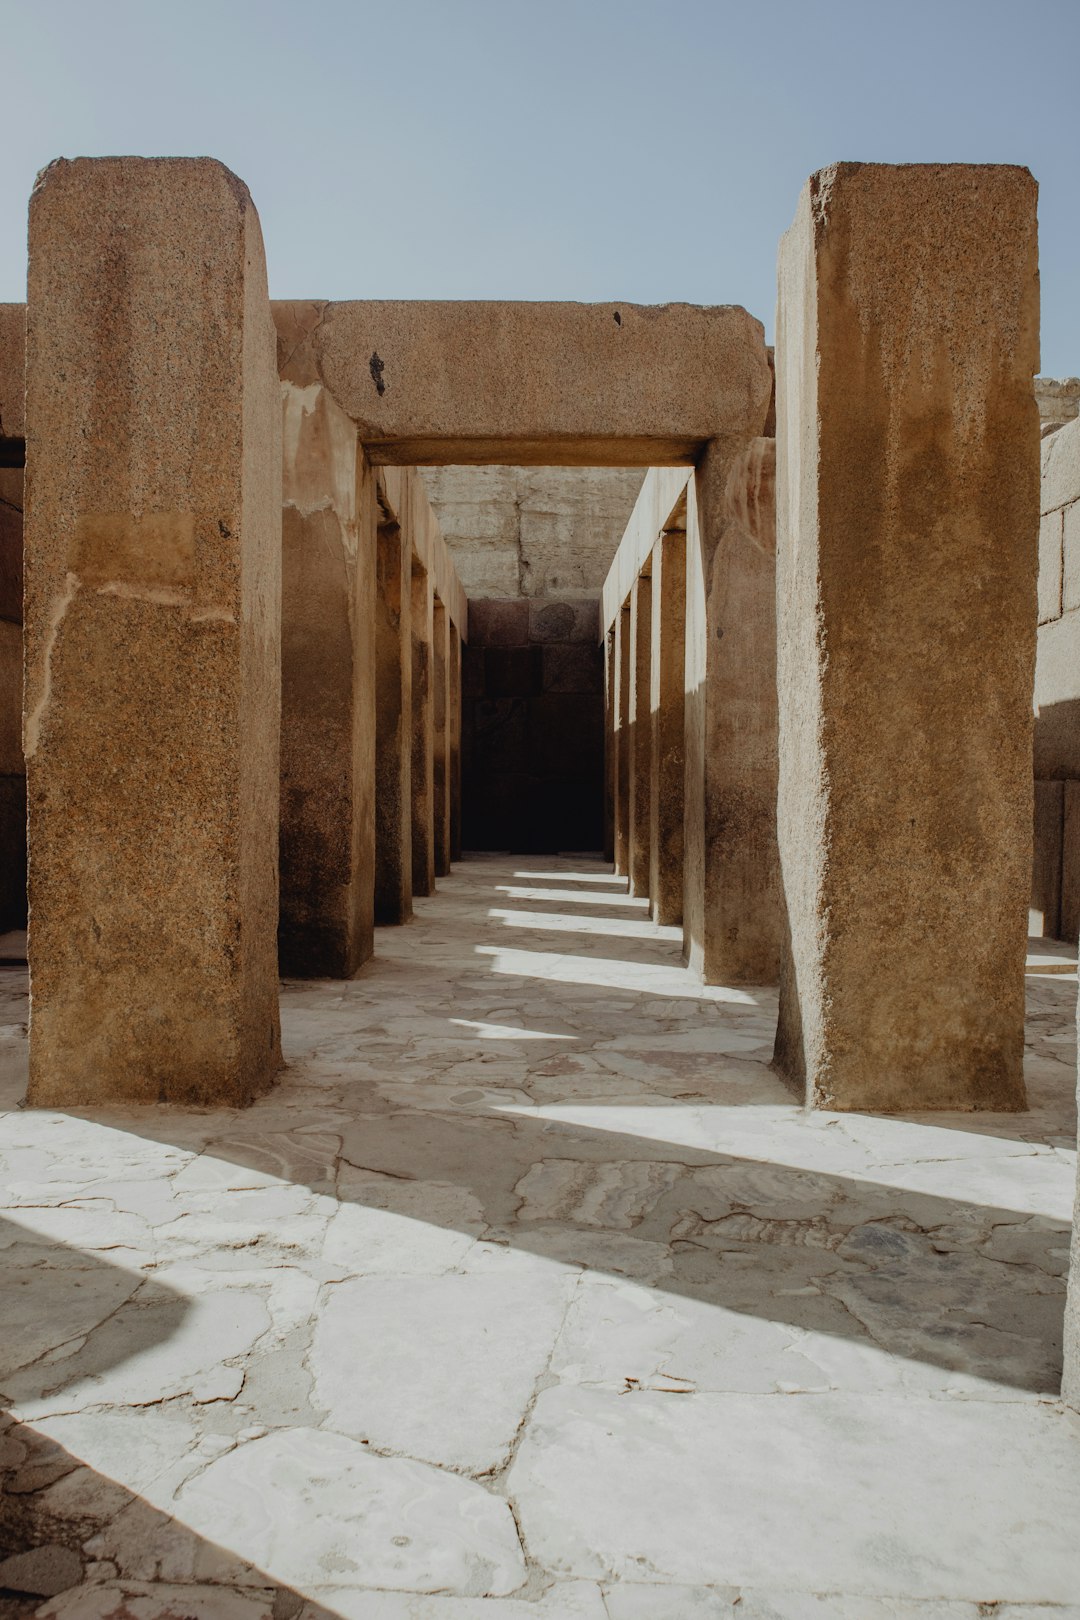 brown concrete hallway during daytime